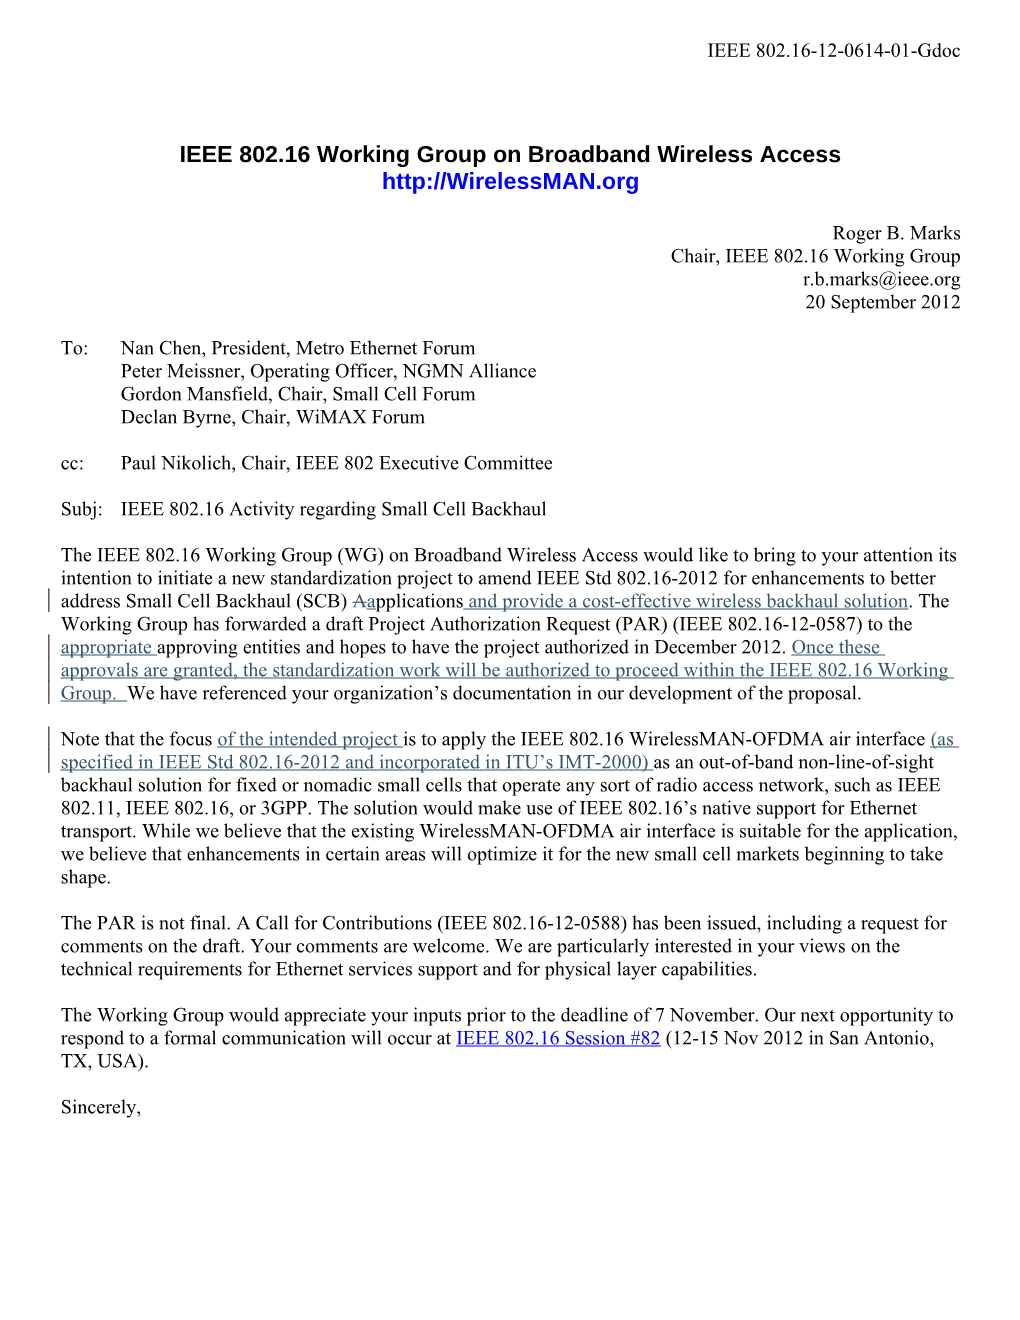 IEEE 802.16 Mentor Document Template s6